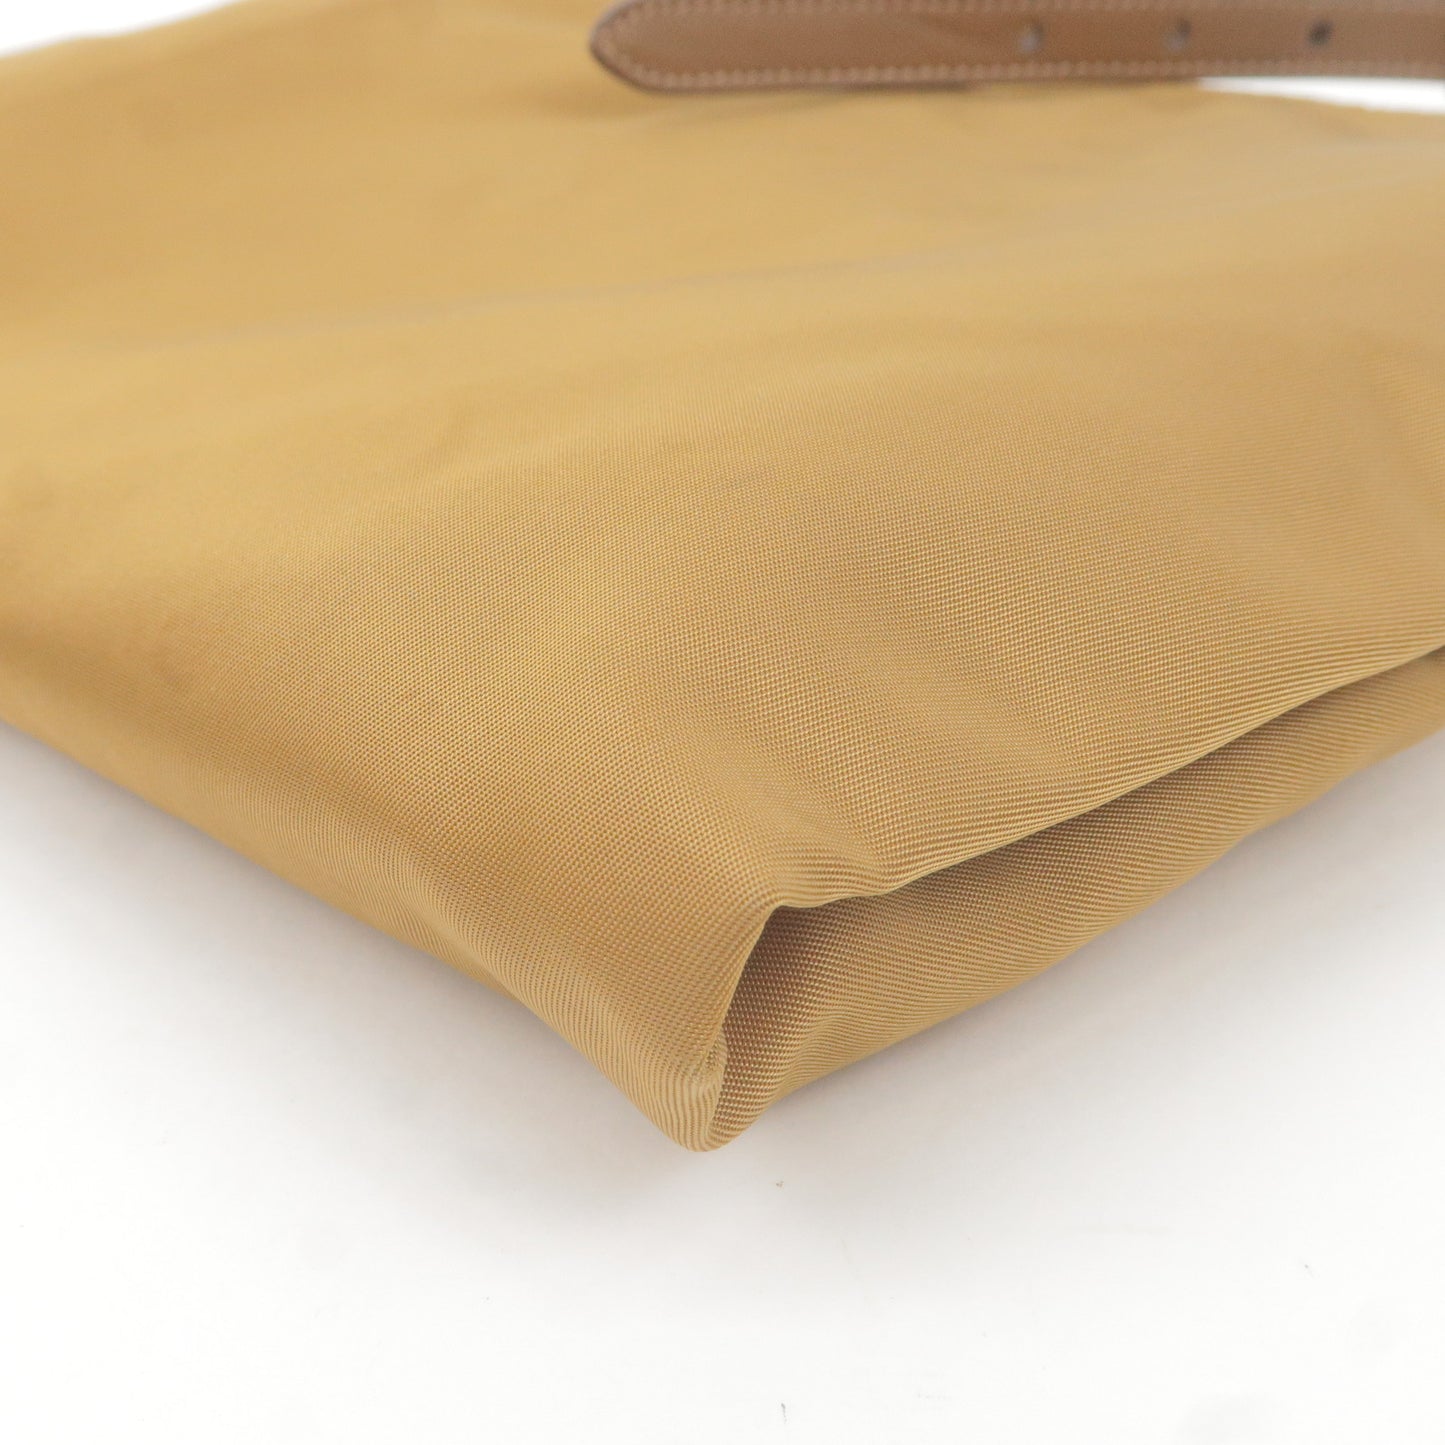 PRADA Logo Nylon Leather Shoulder Bag Crossbody Bag Brown